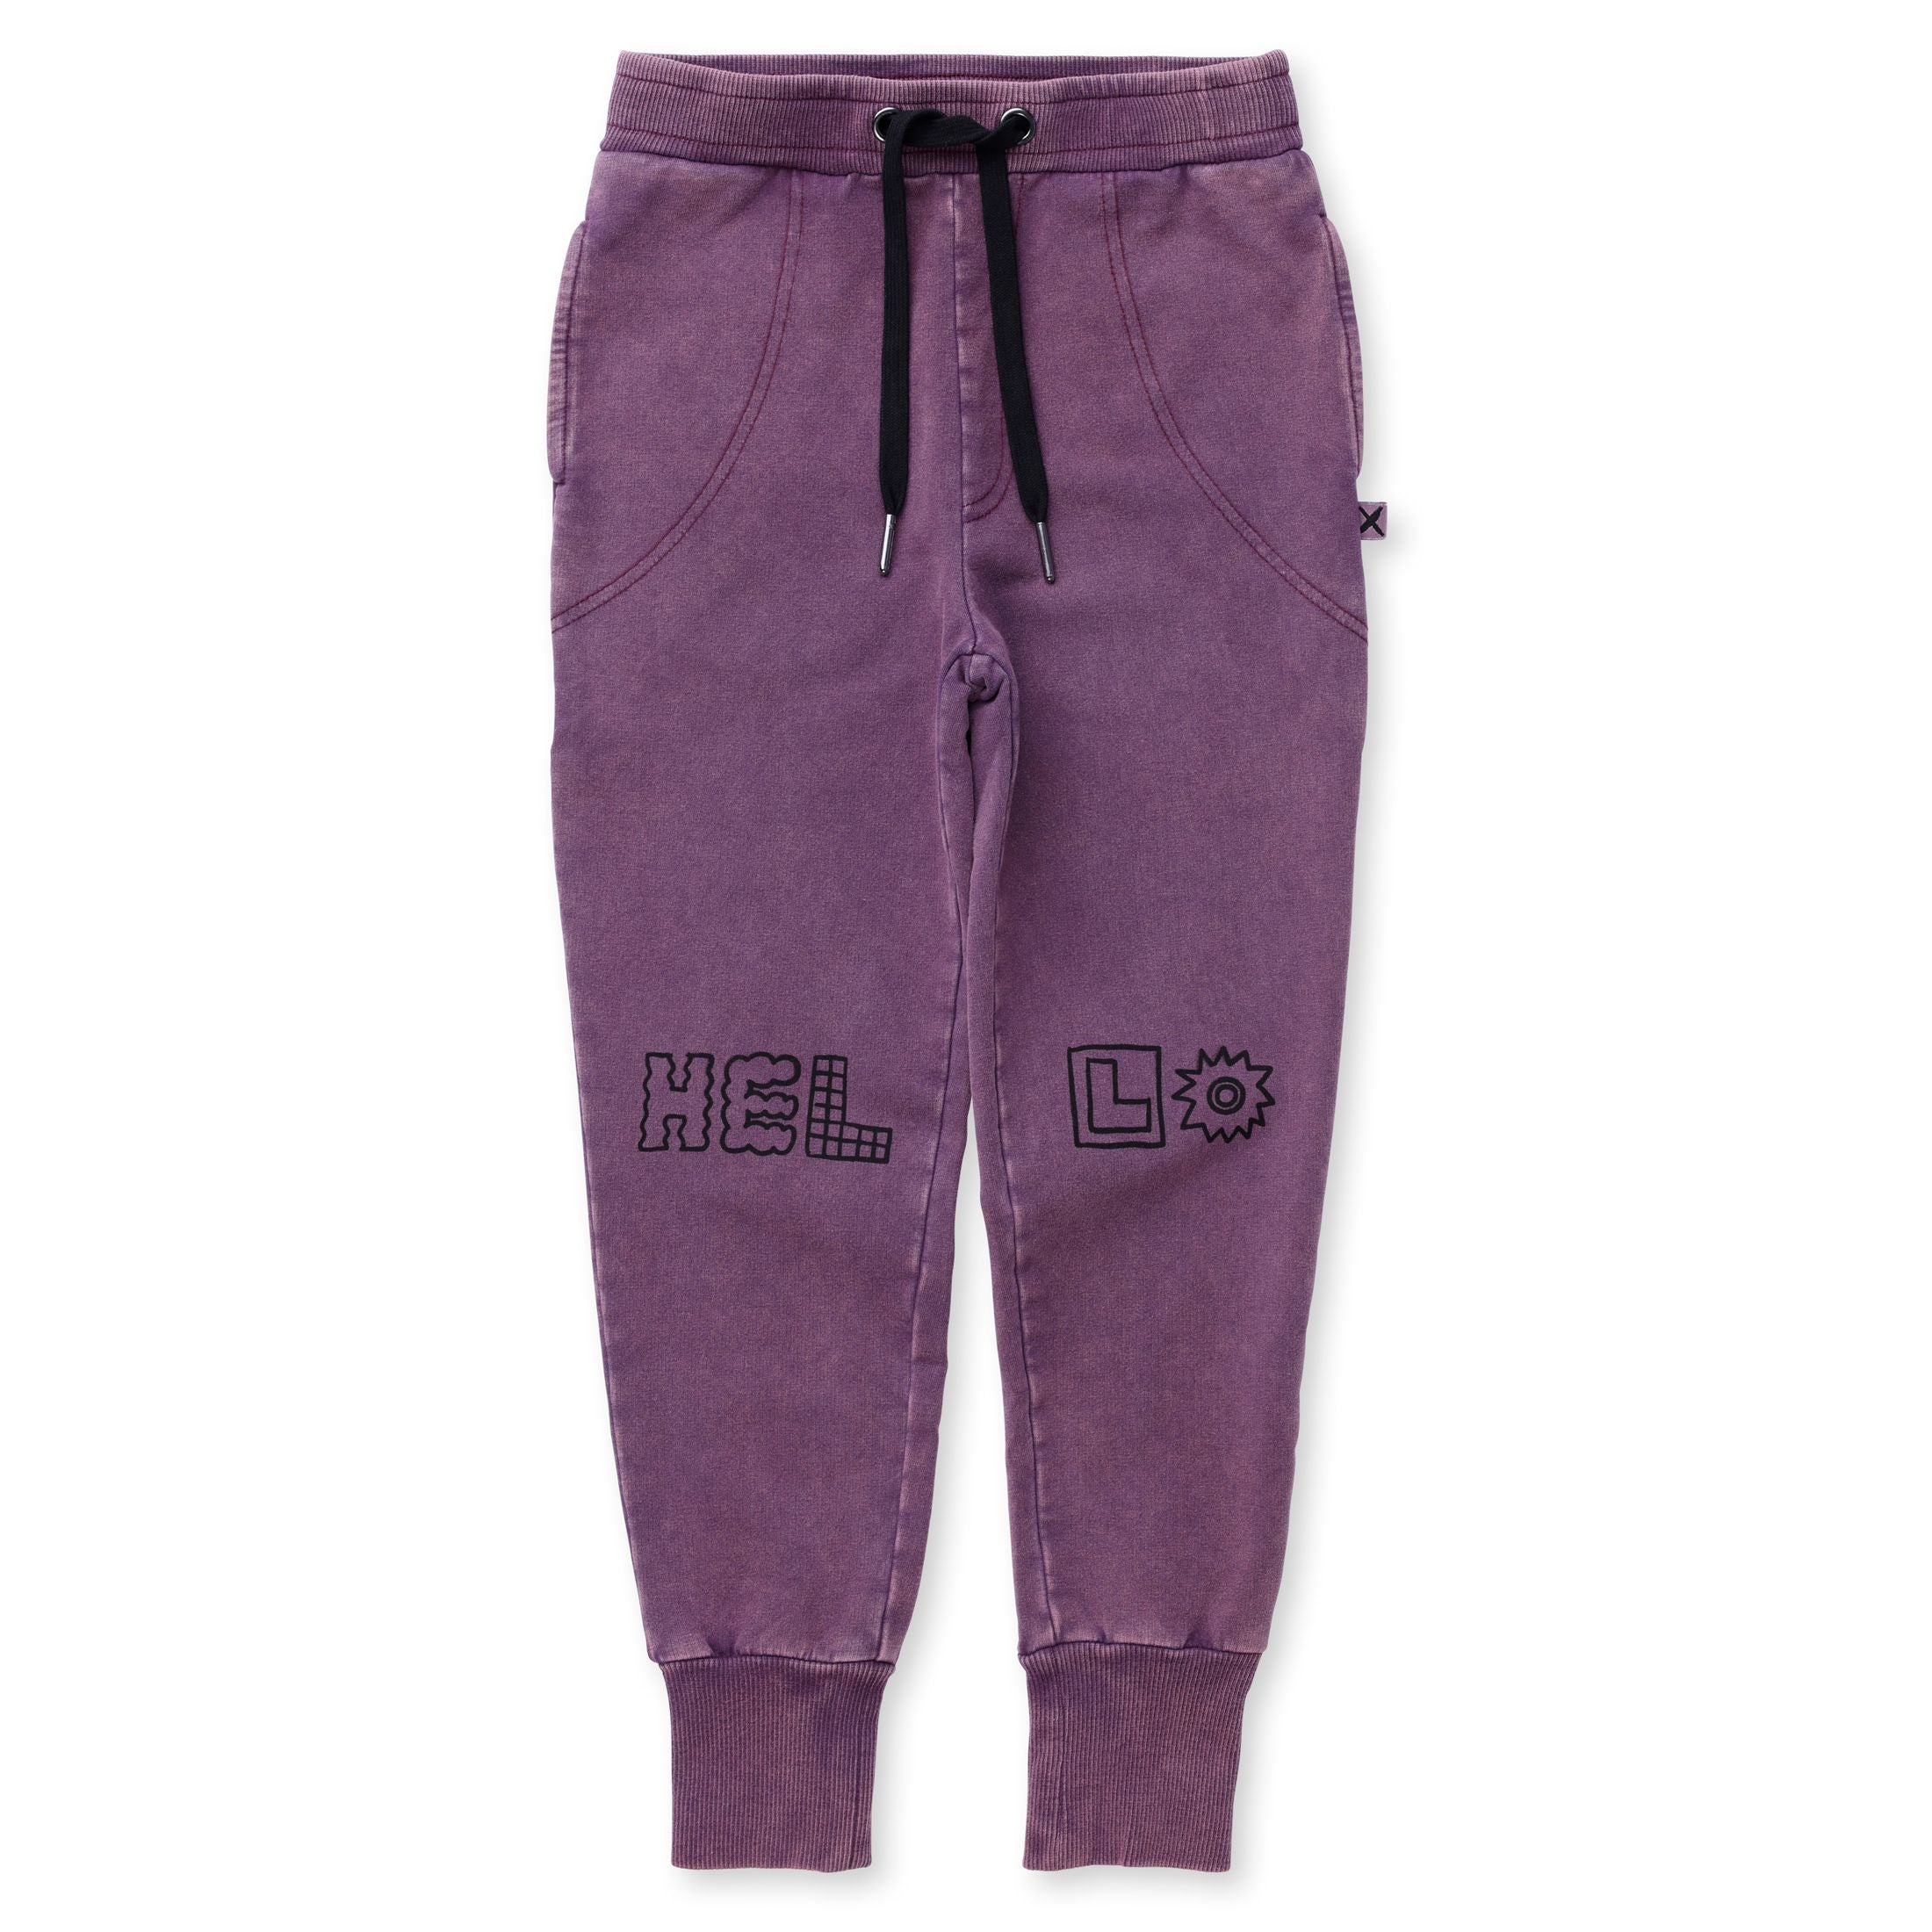 Fancy hello track pants - purple wash